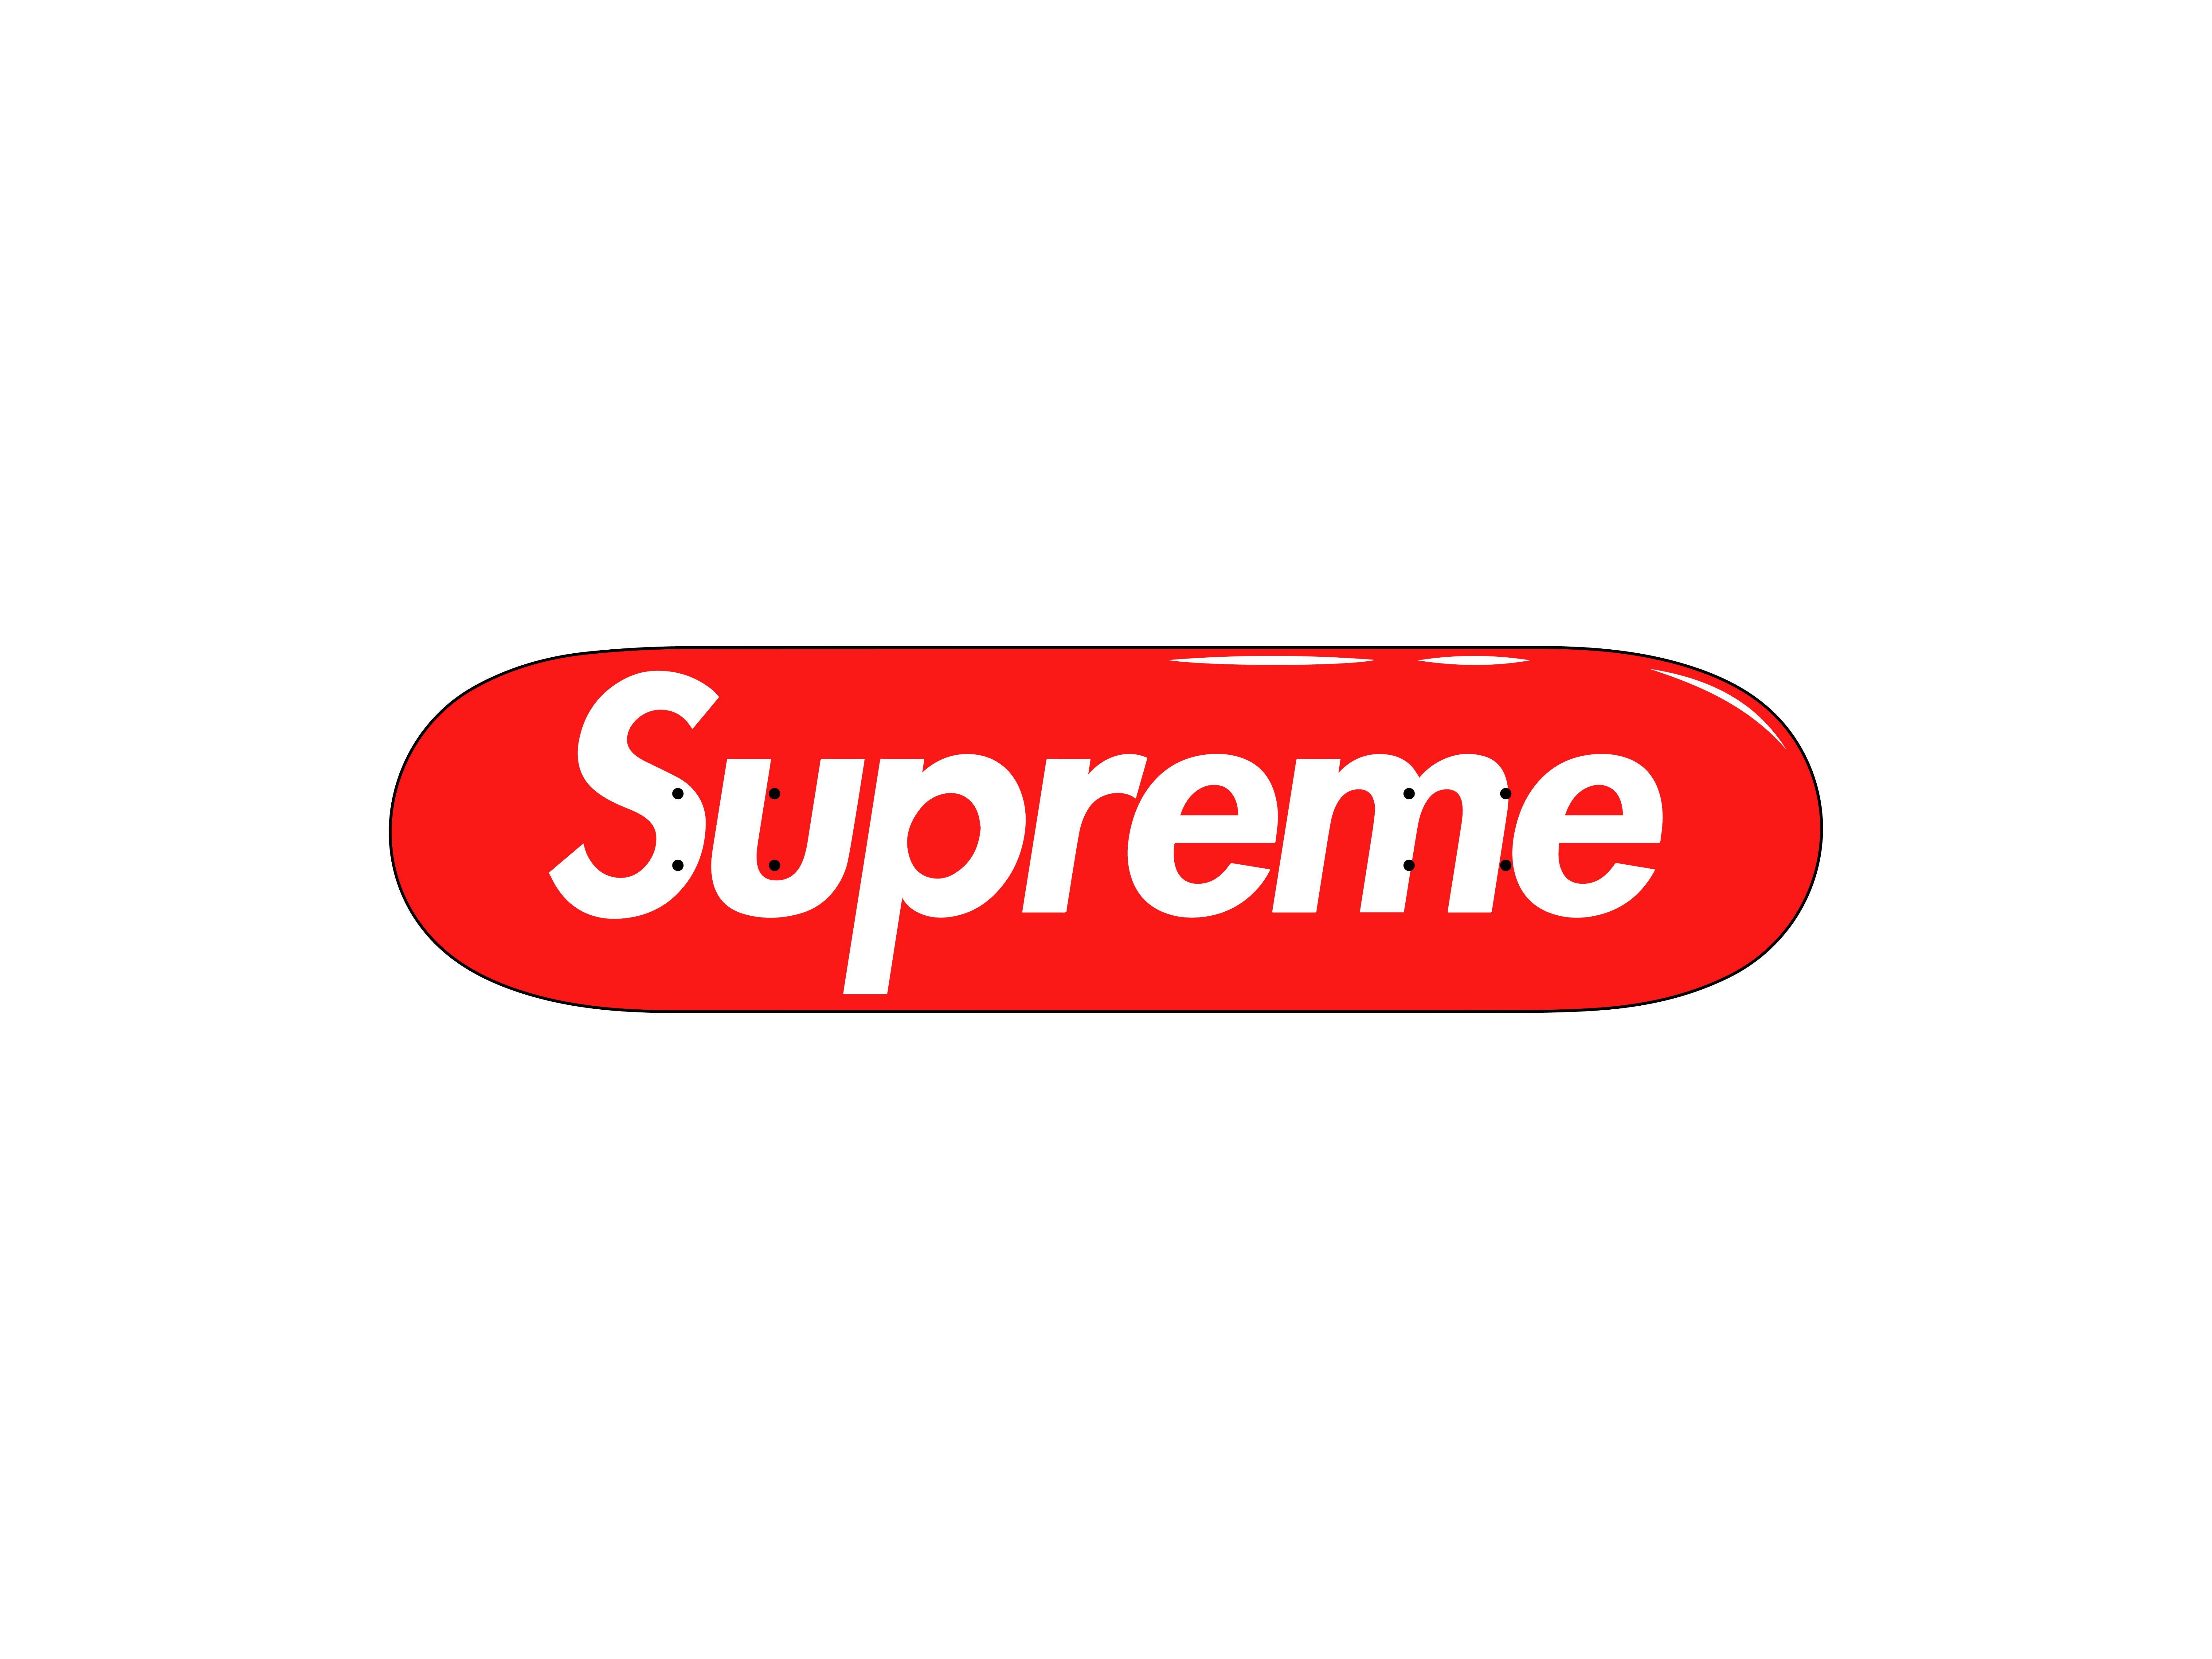 Hypebeast Supreme Logo - Lit AF! #SupremeBoxLogo, #Setof3Prints #Supreme #Kicks ...